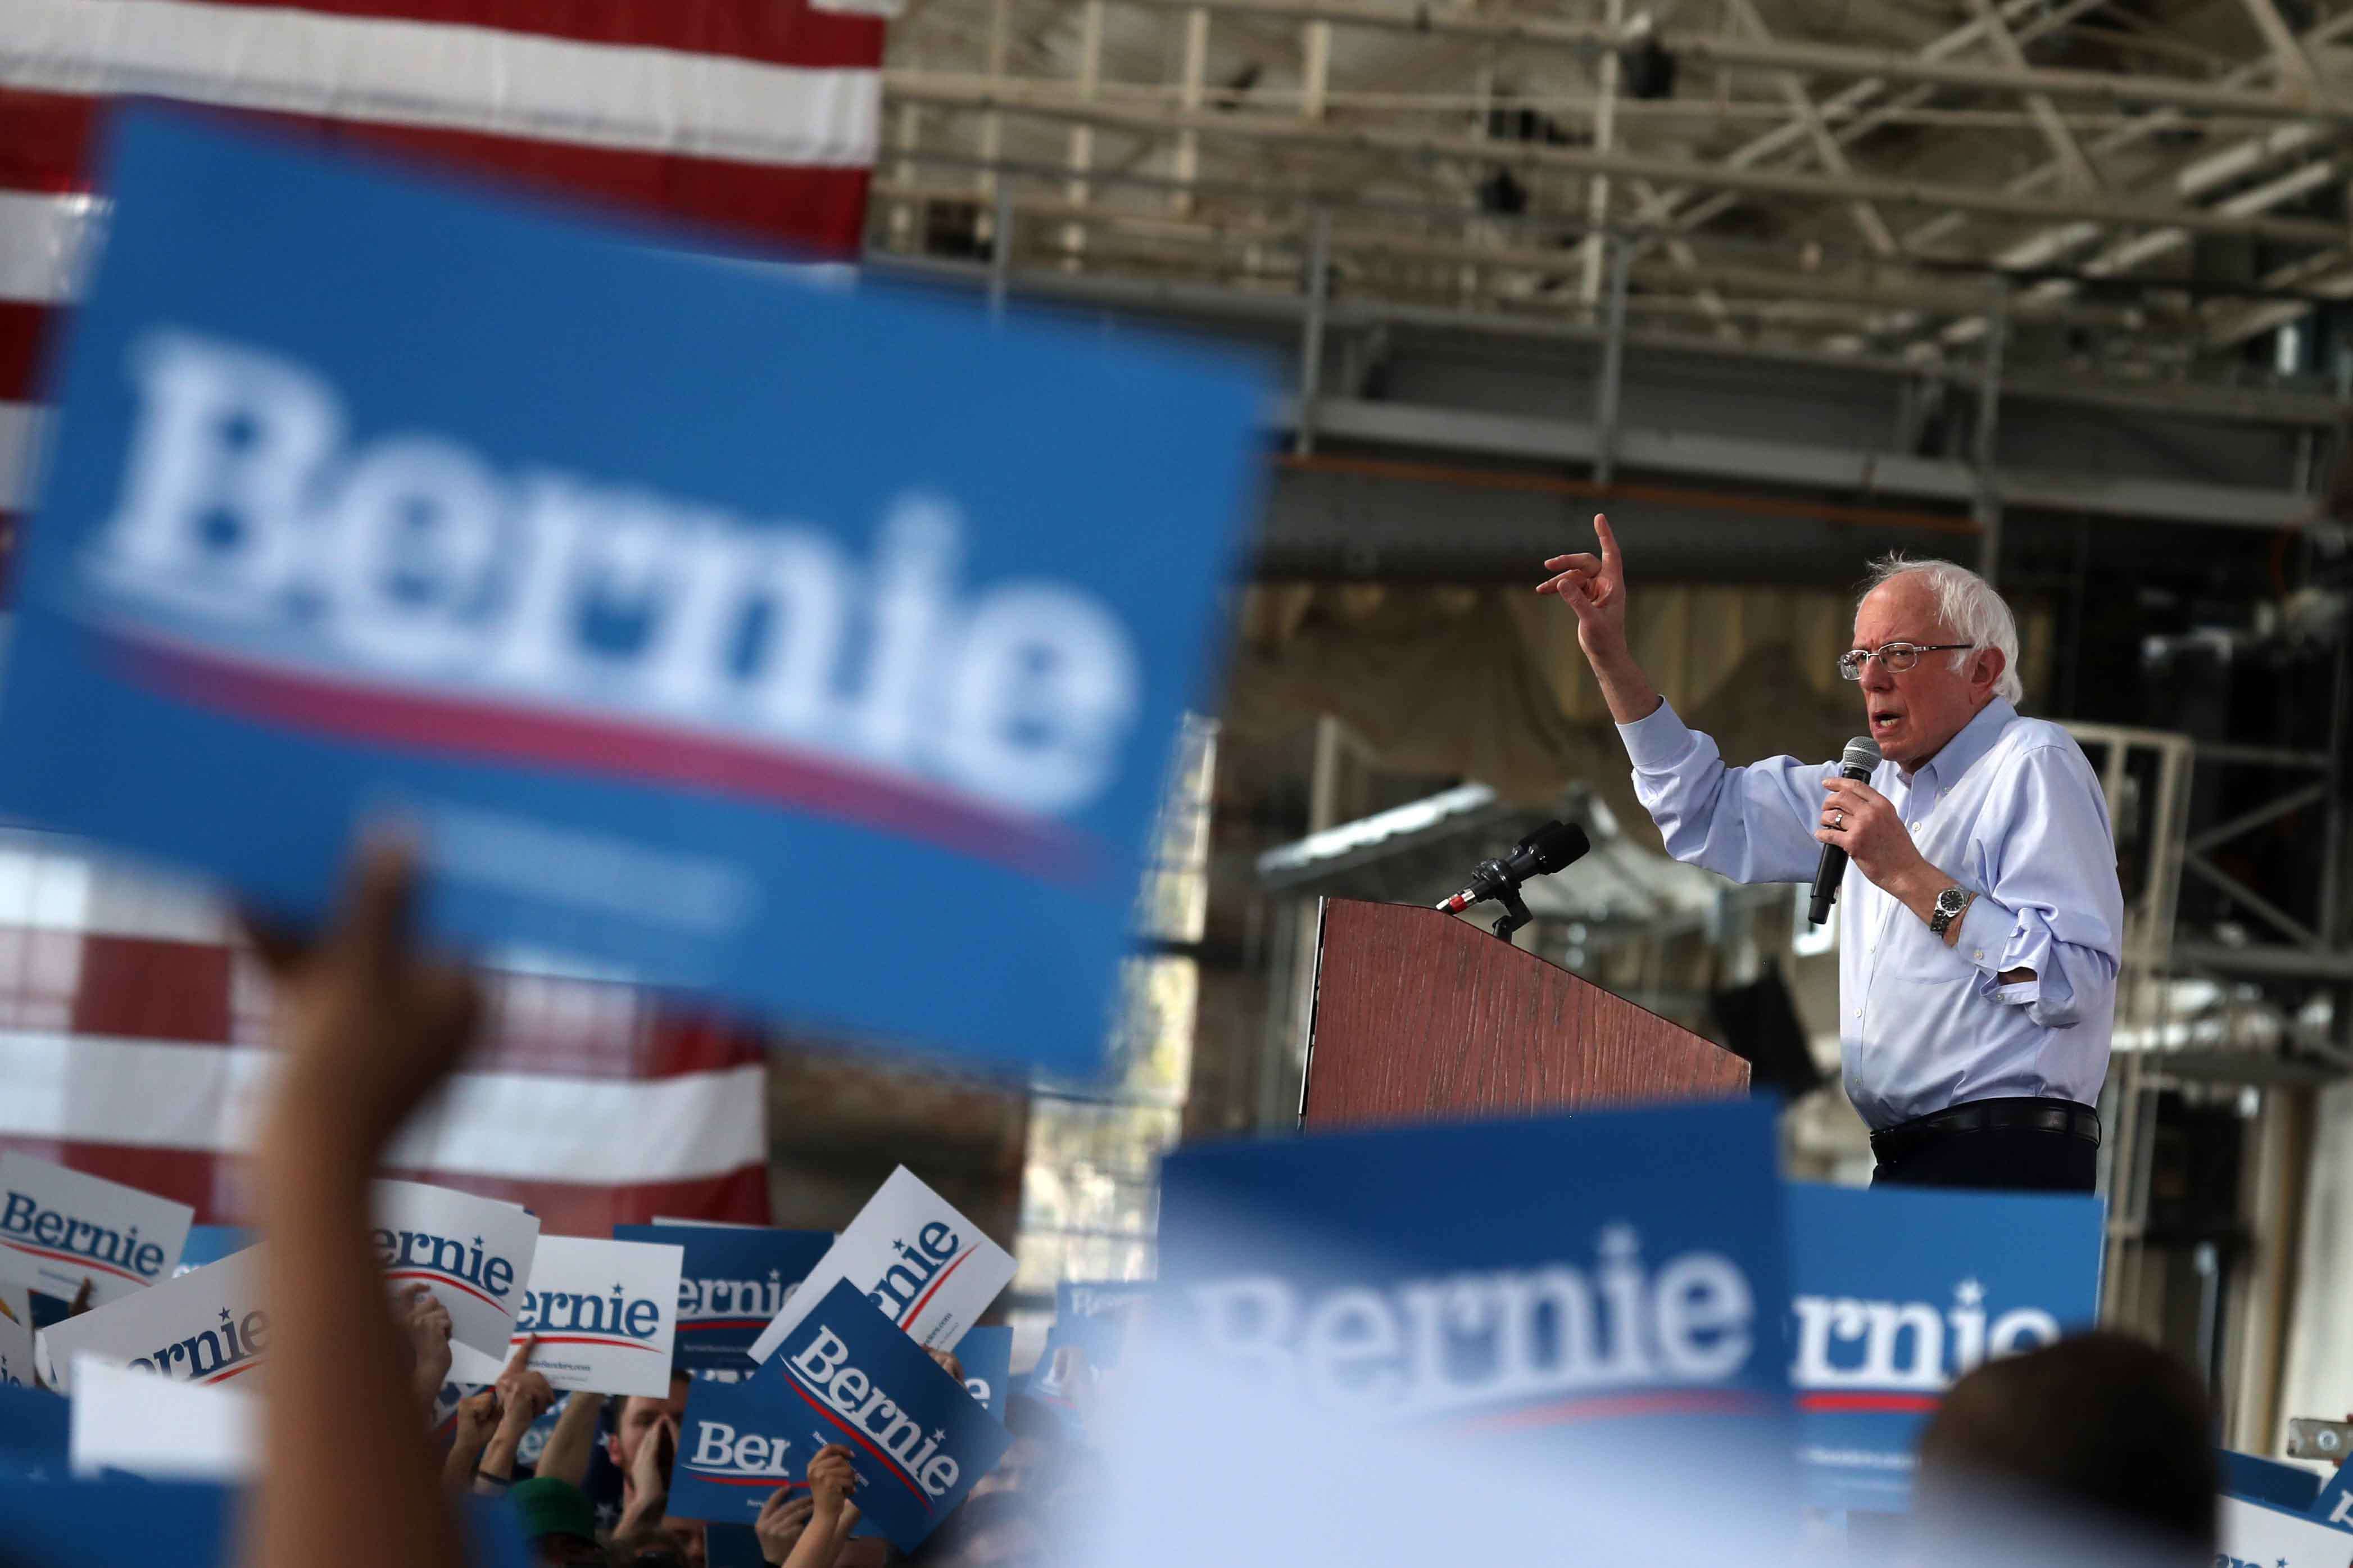 image for Major Latino group backs Sanders on eve of Nevada caucus